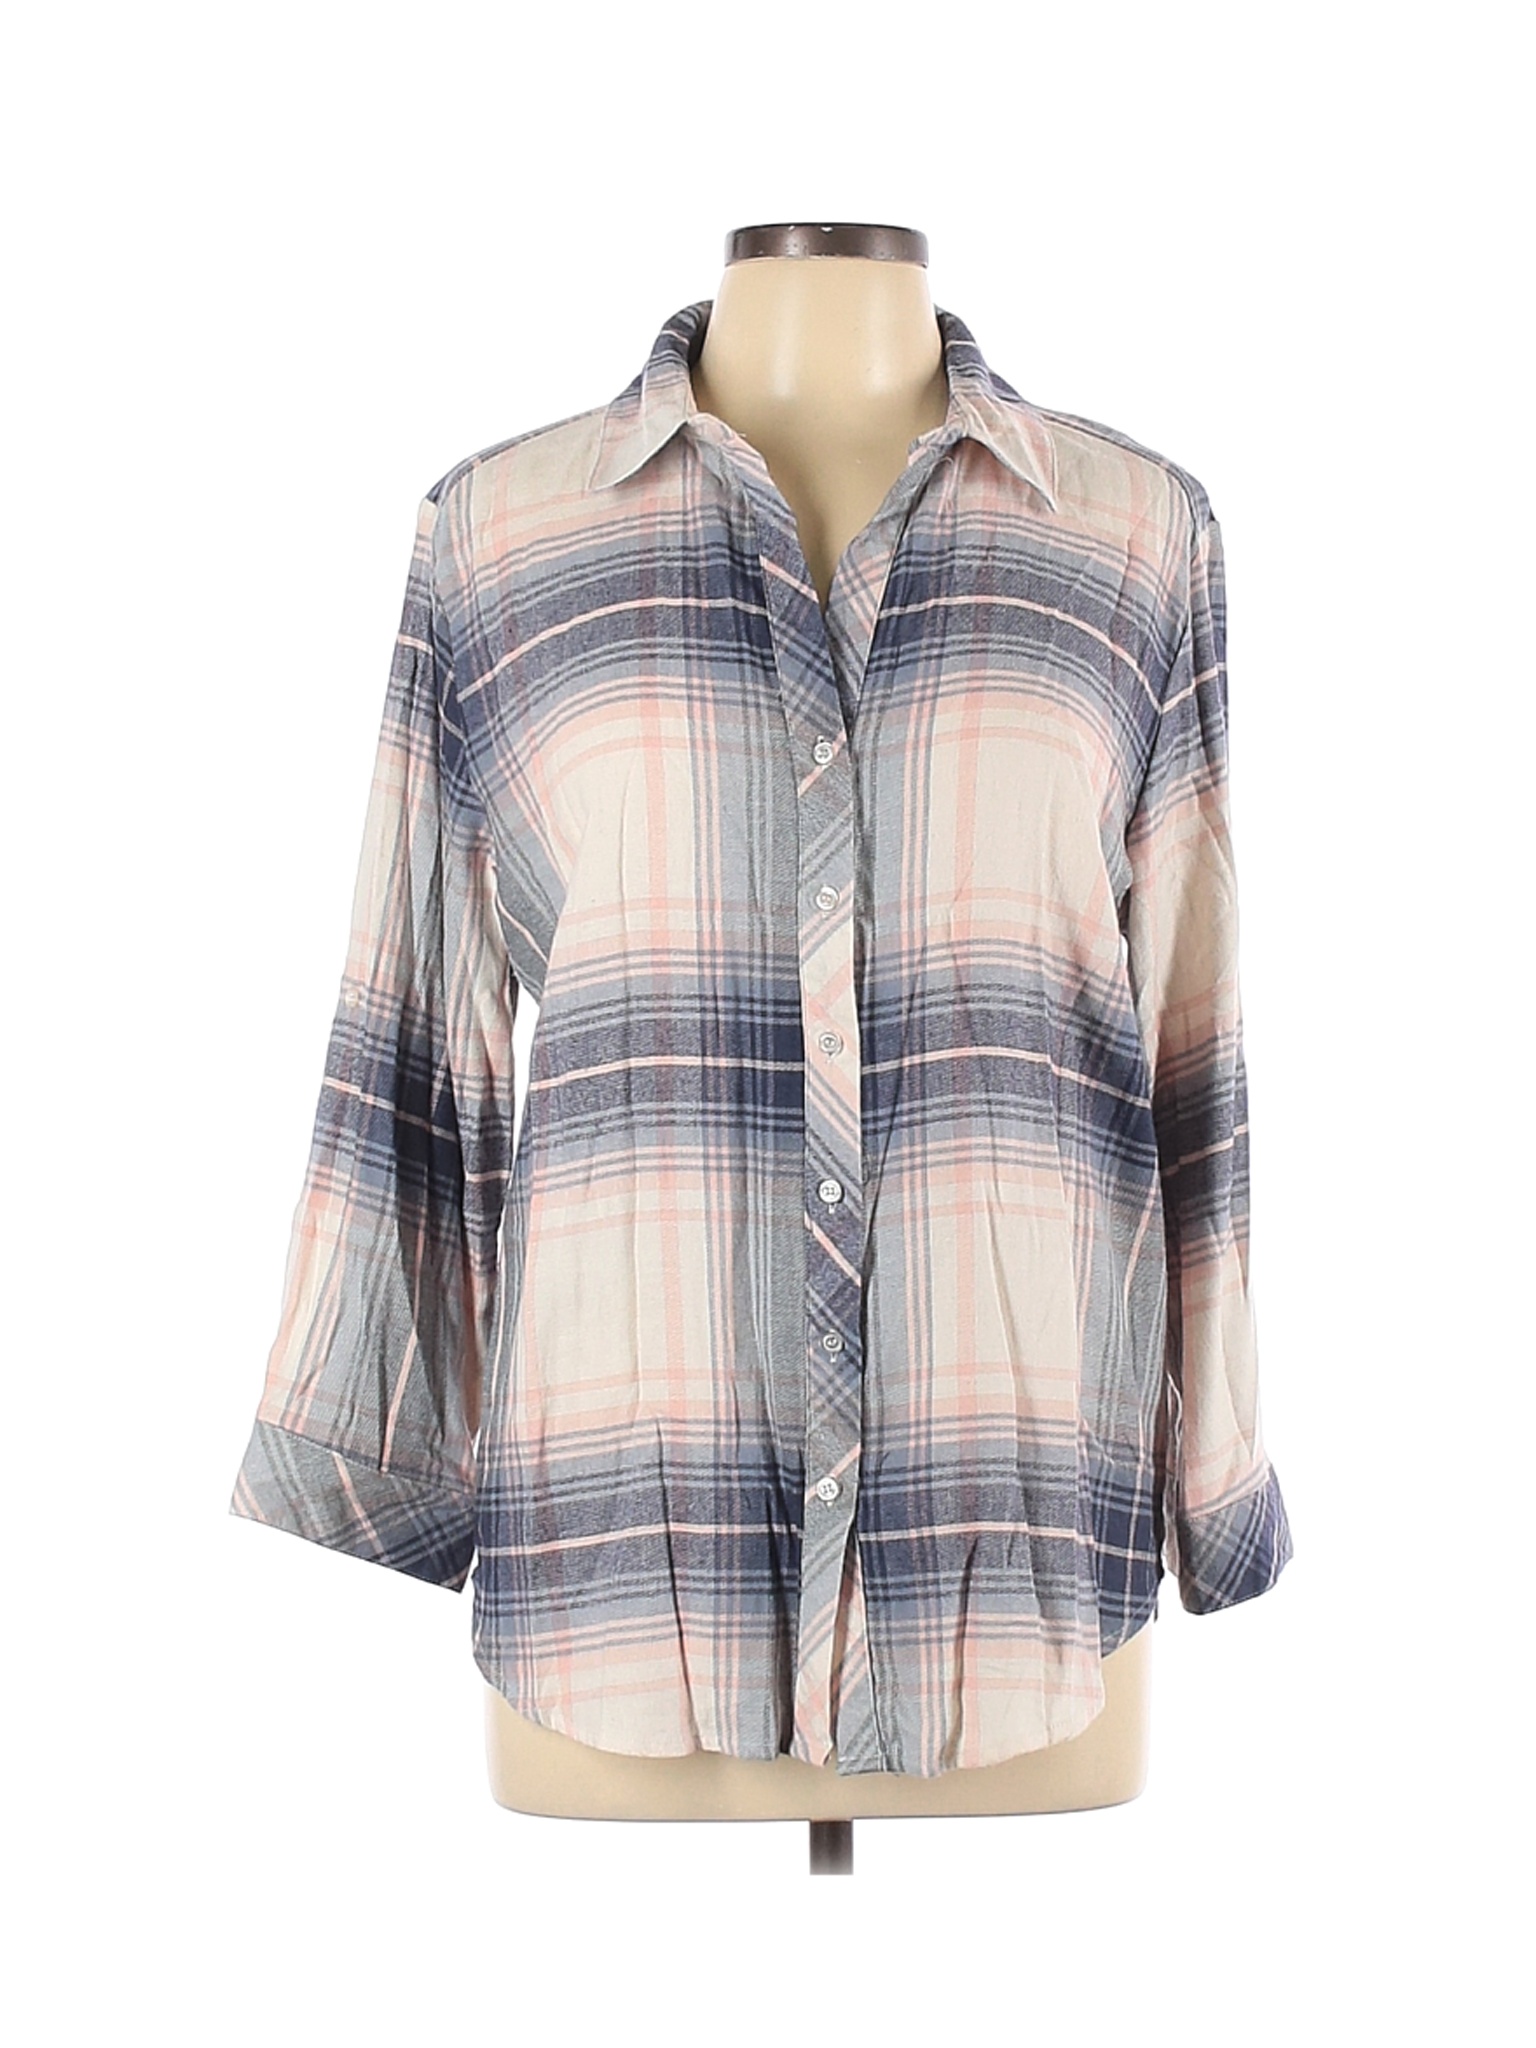 Hester & Orchard Women Pink Long Sleeve Button-Down Shirt L | eBay